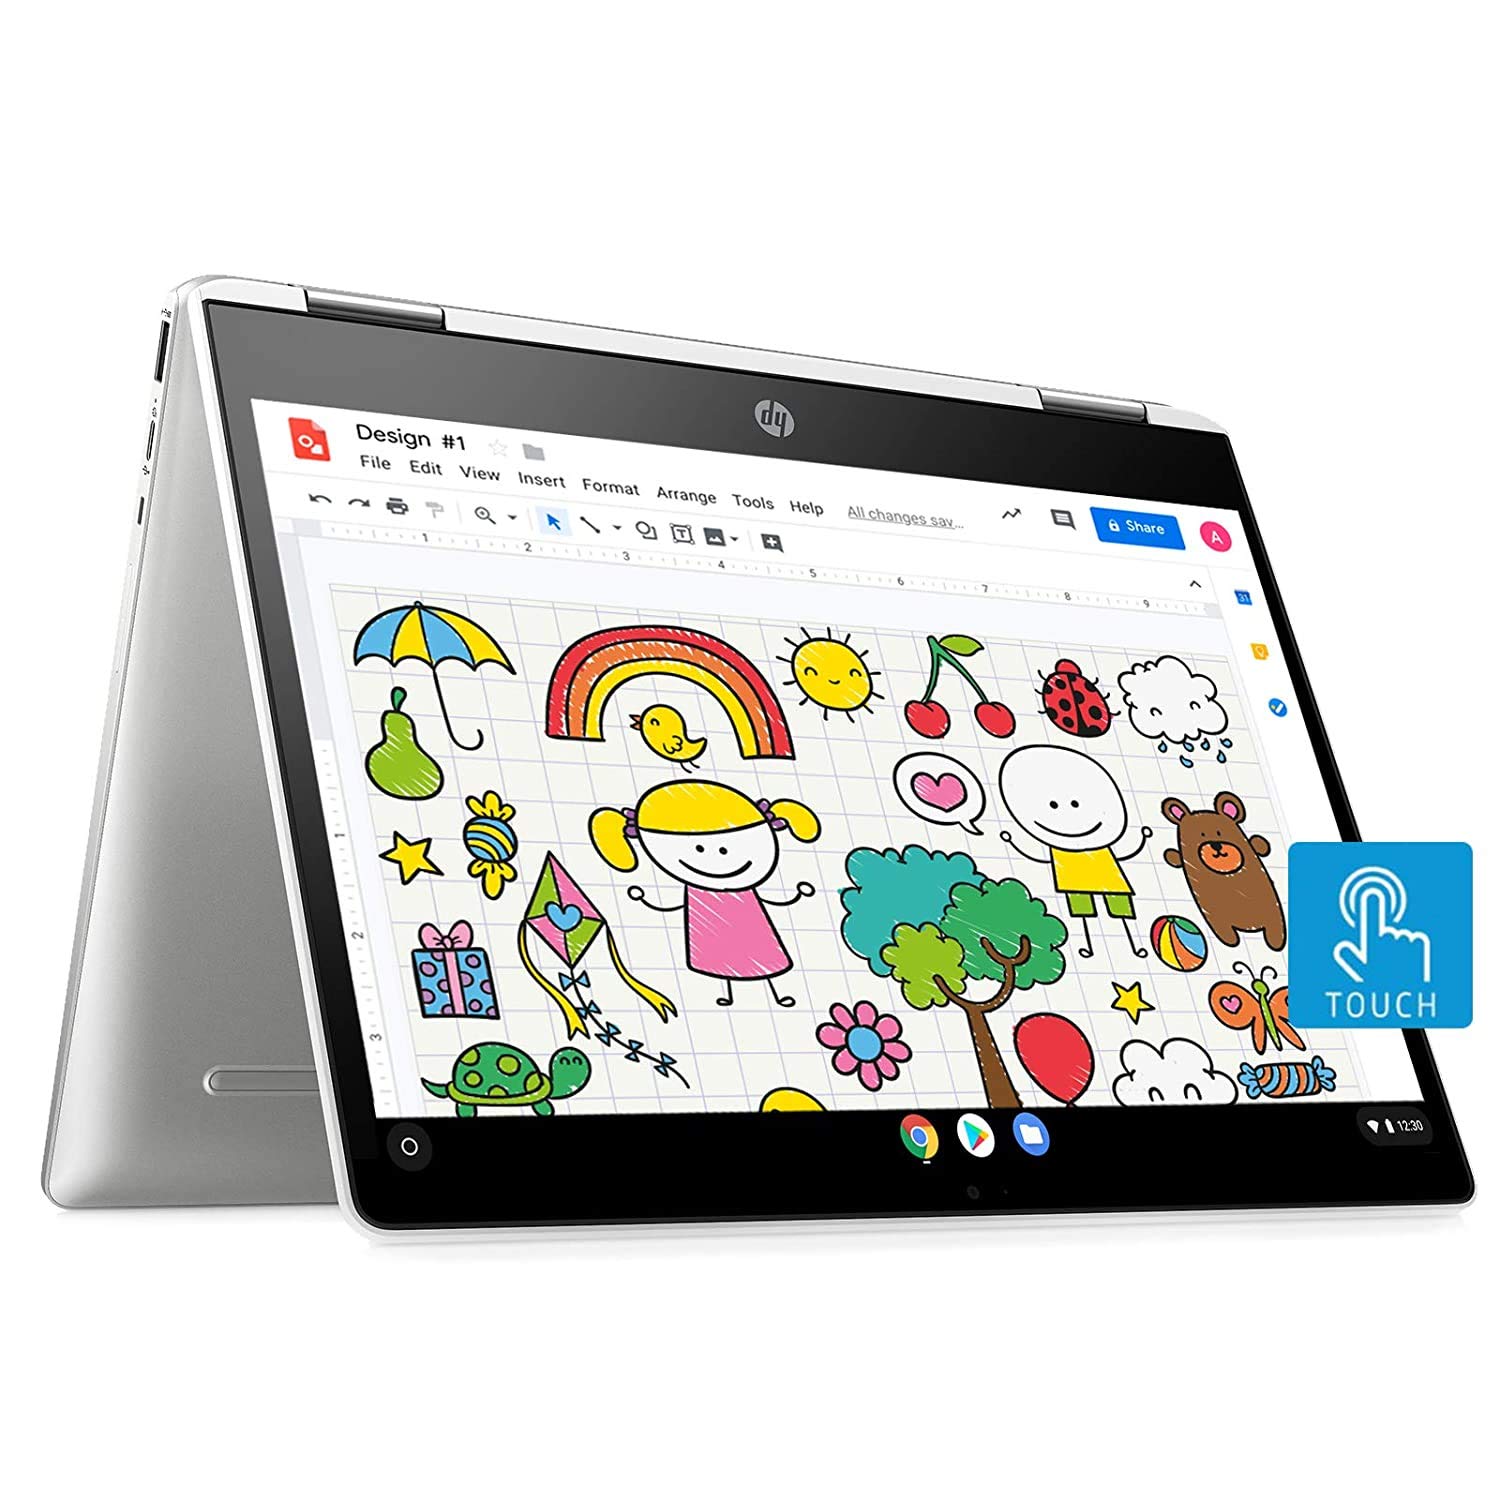 HP Chromebook x360 Offers